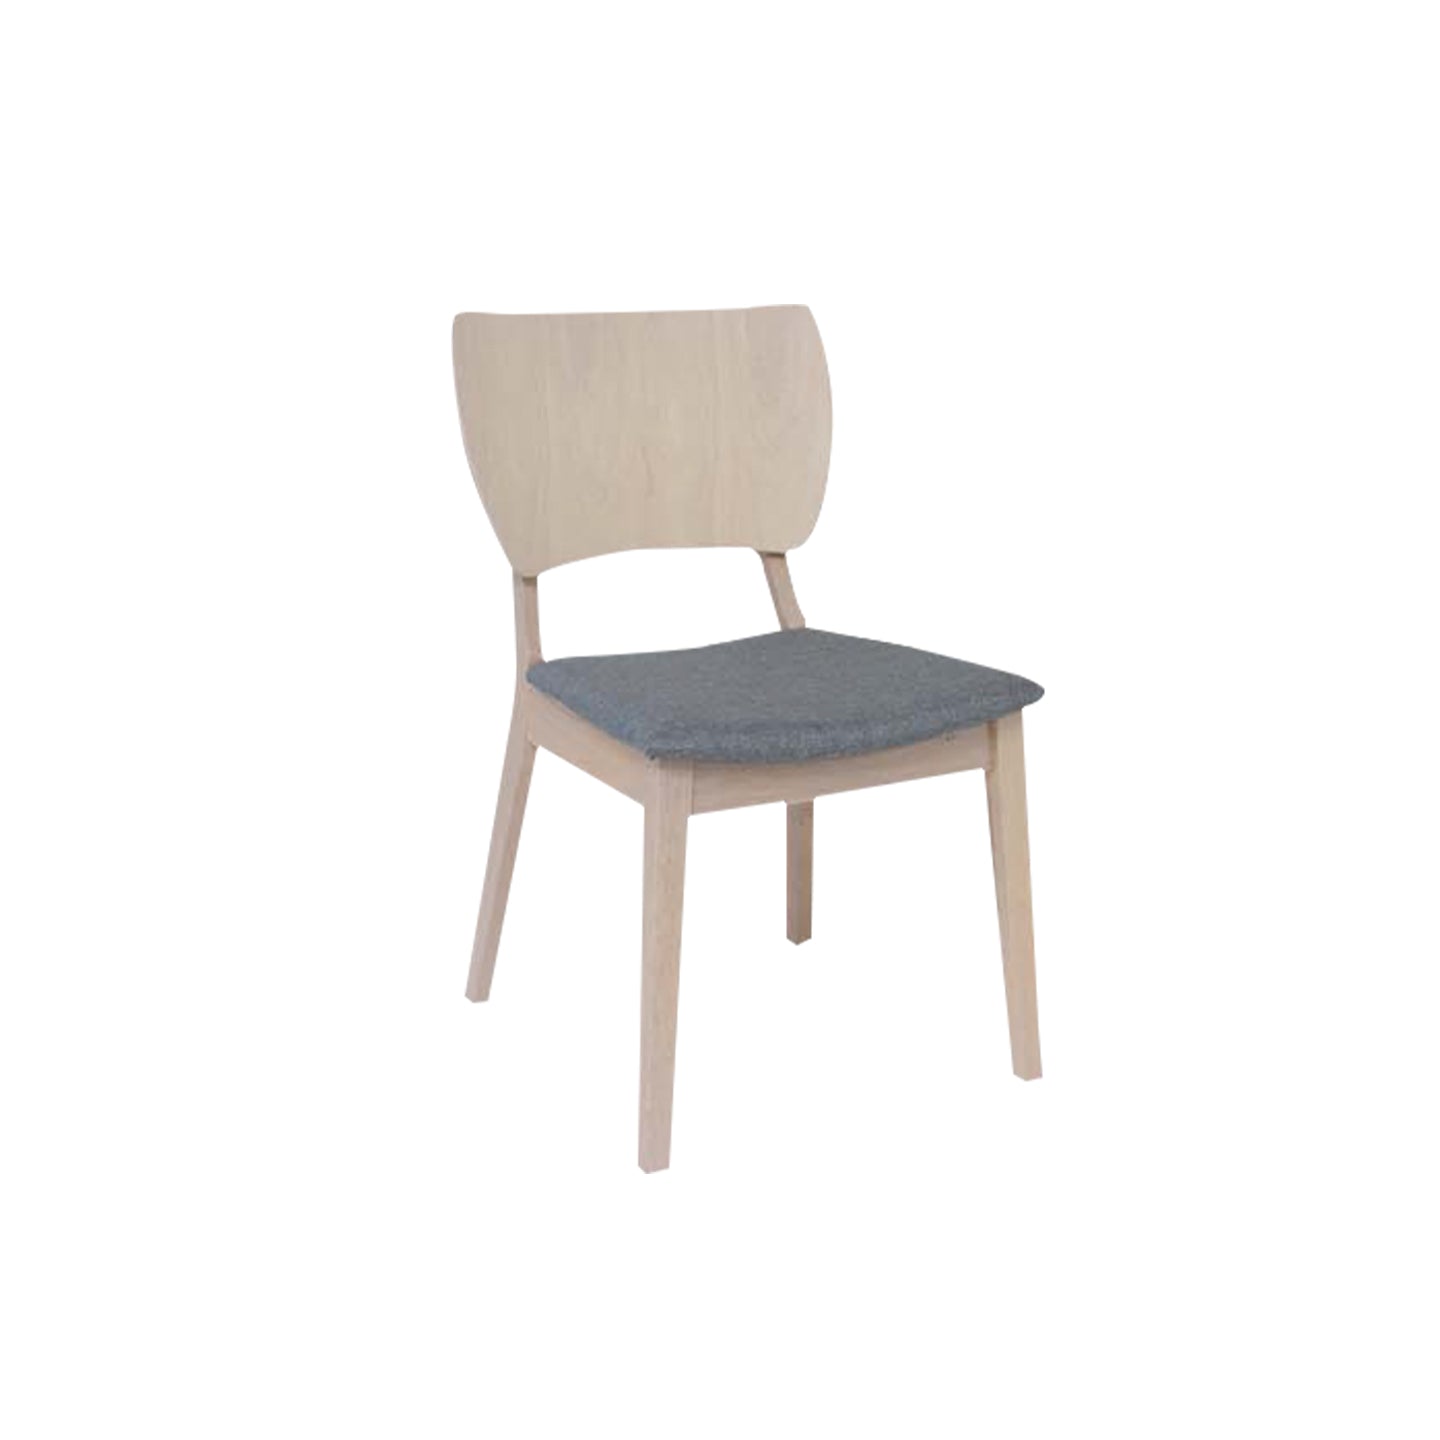 Kazuno Chair